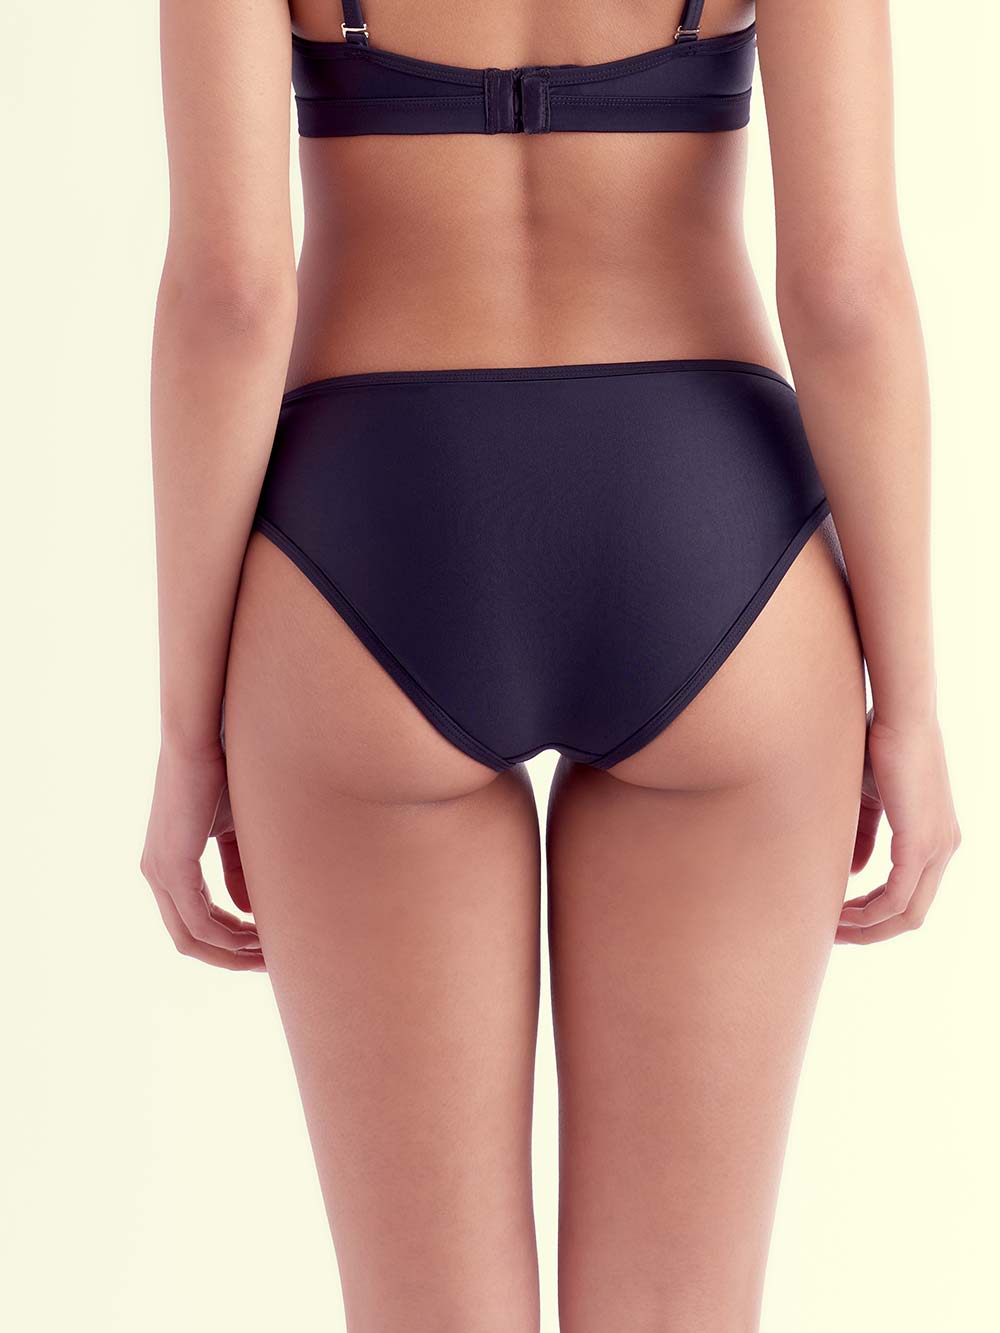 Camille petite swimsuit bottoms